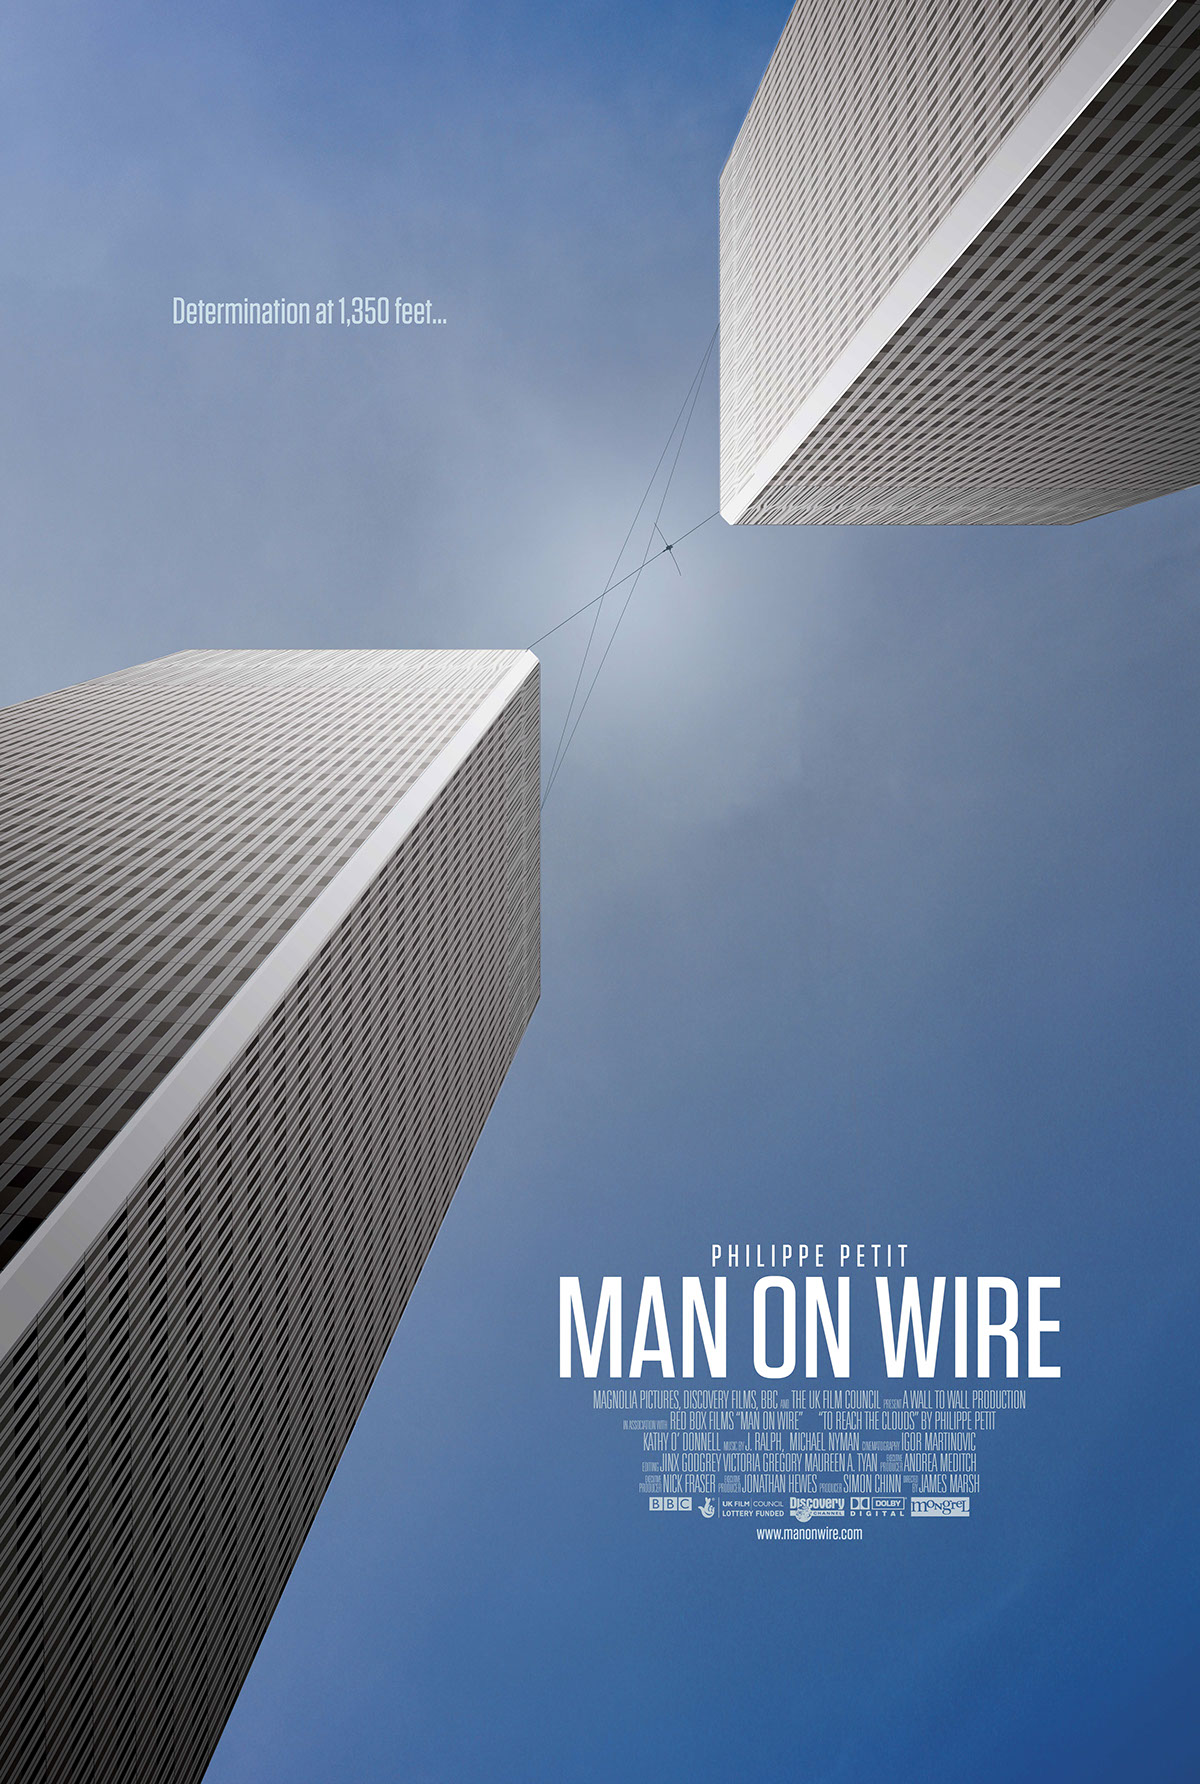 Man on Wire, Documentary films